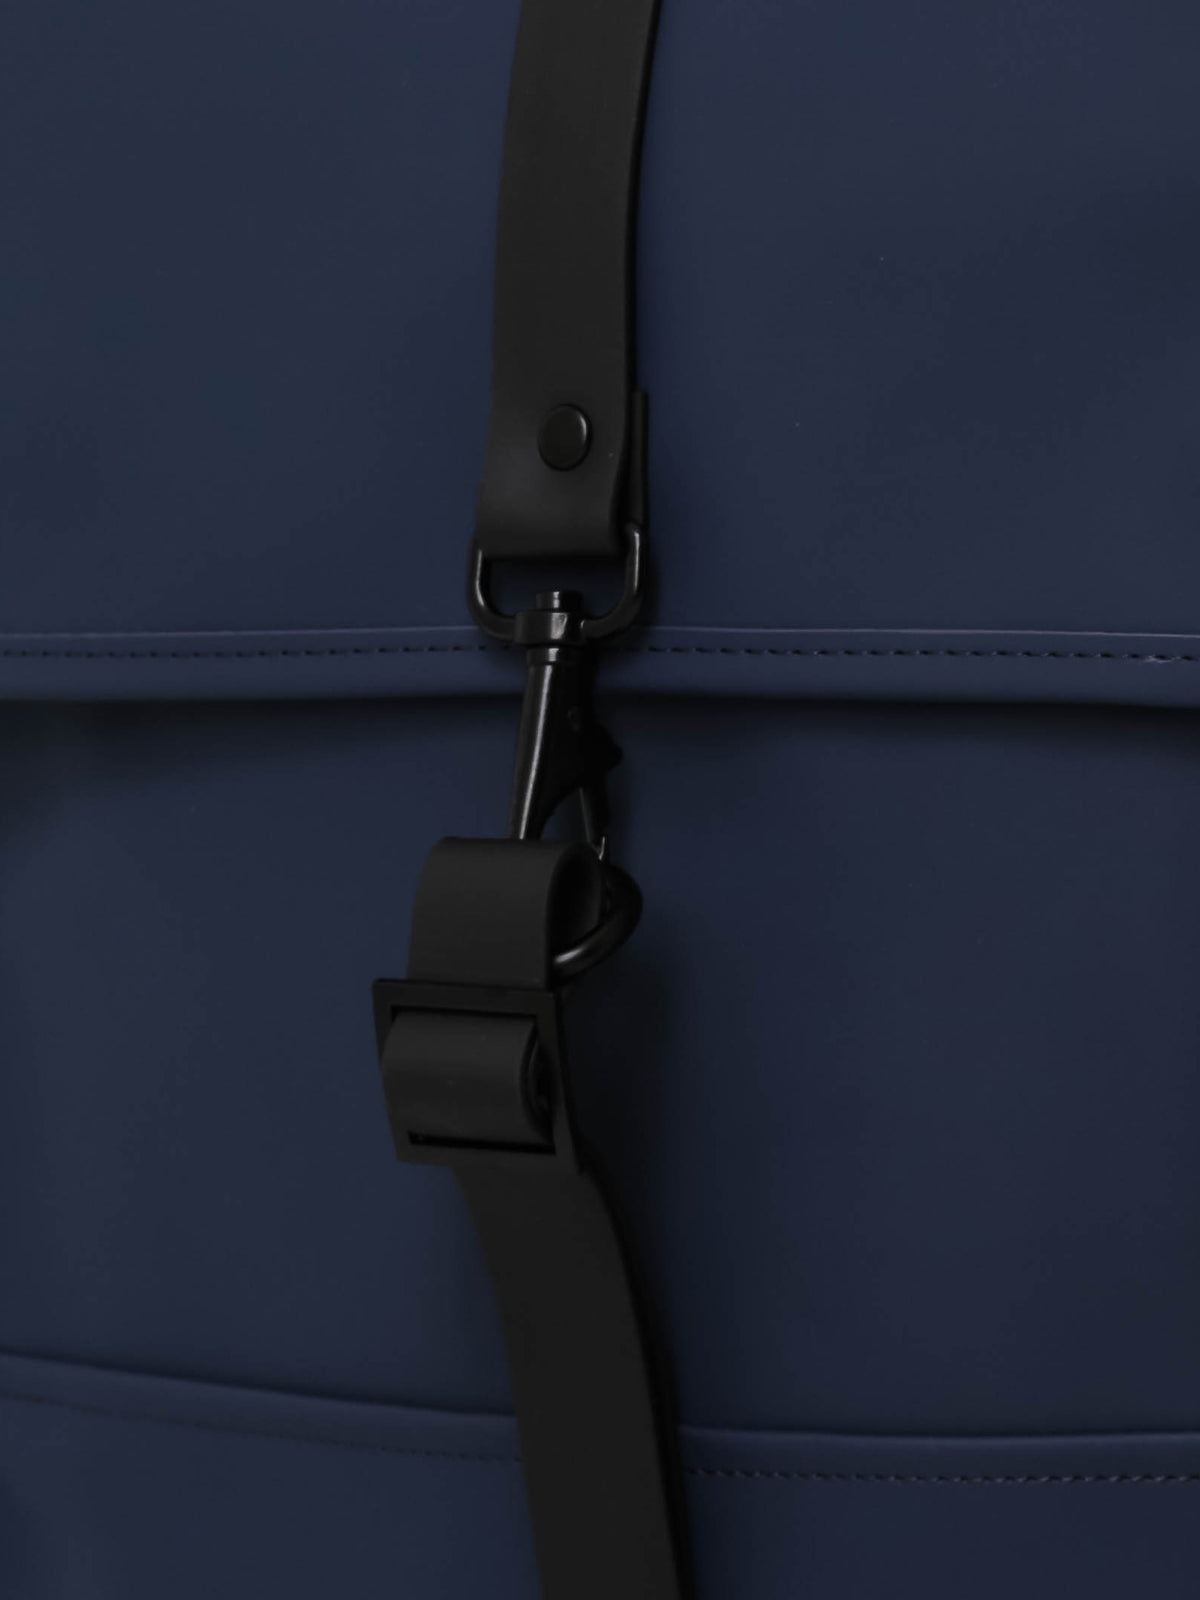 Essential Bag in Dark Blue